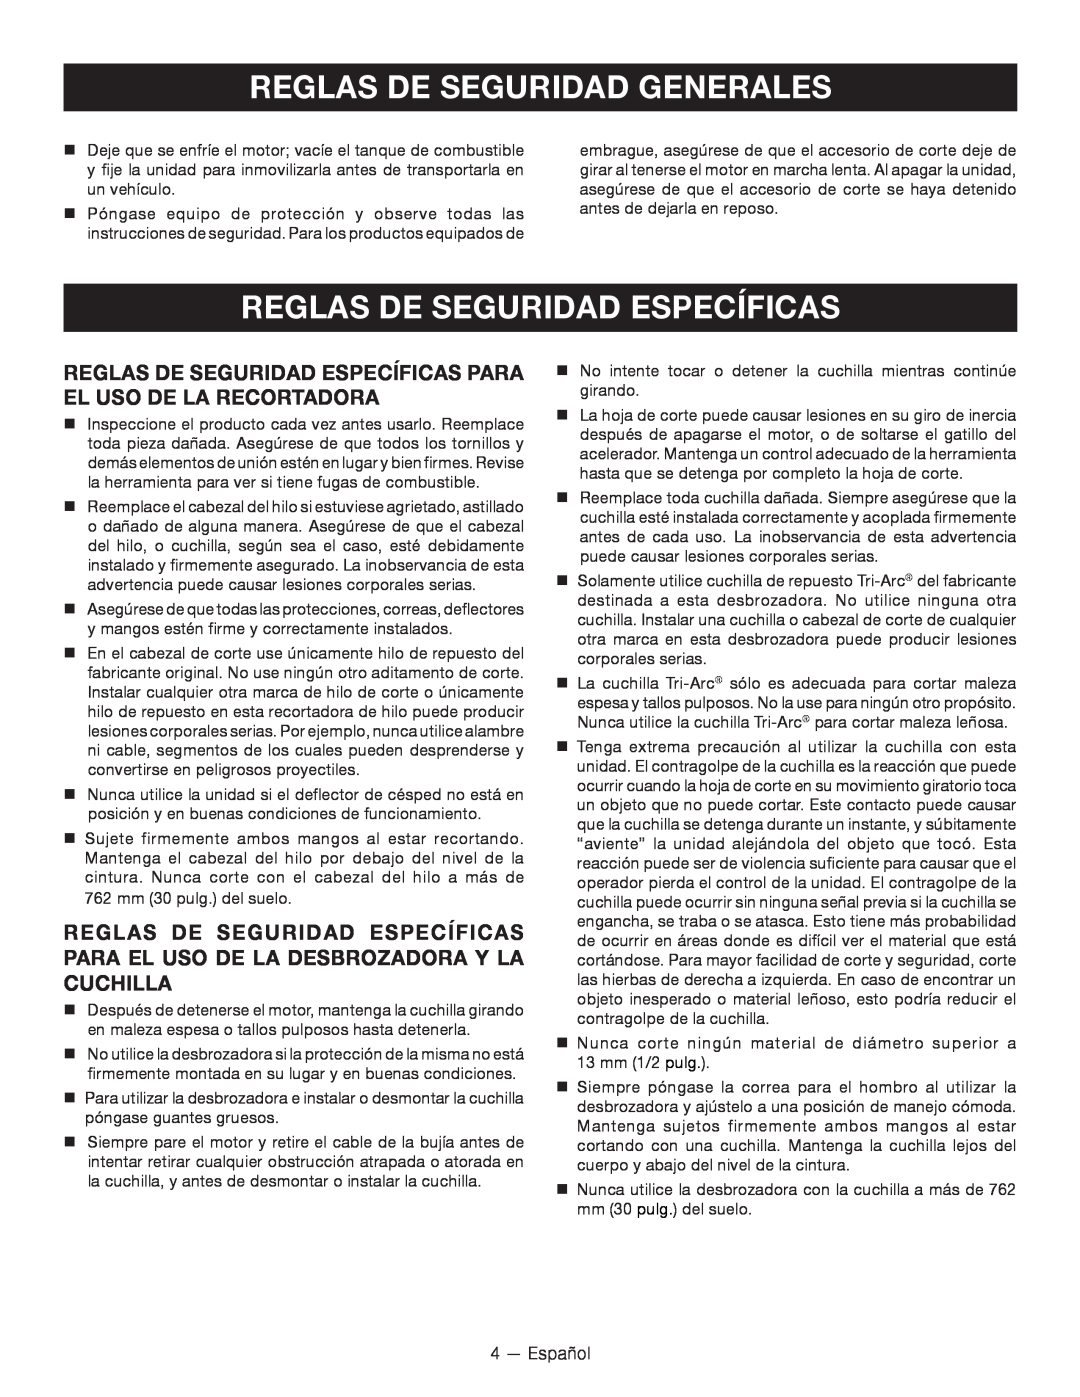 Ryobi RY26901 Reglas De Seguridad Específicas, Reglas de seguridad específicas para el uso de la recortadora, Español 